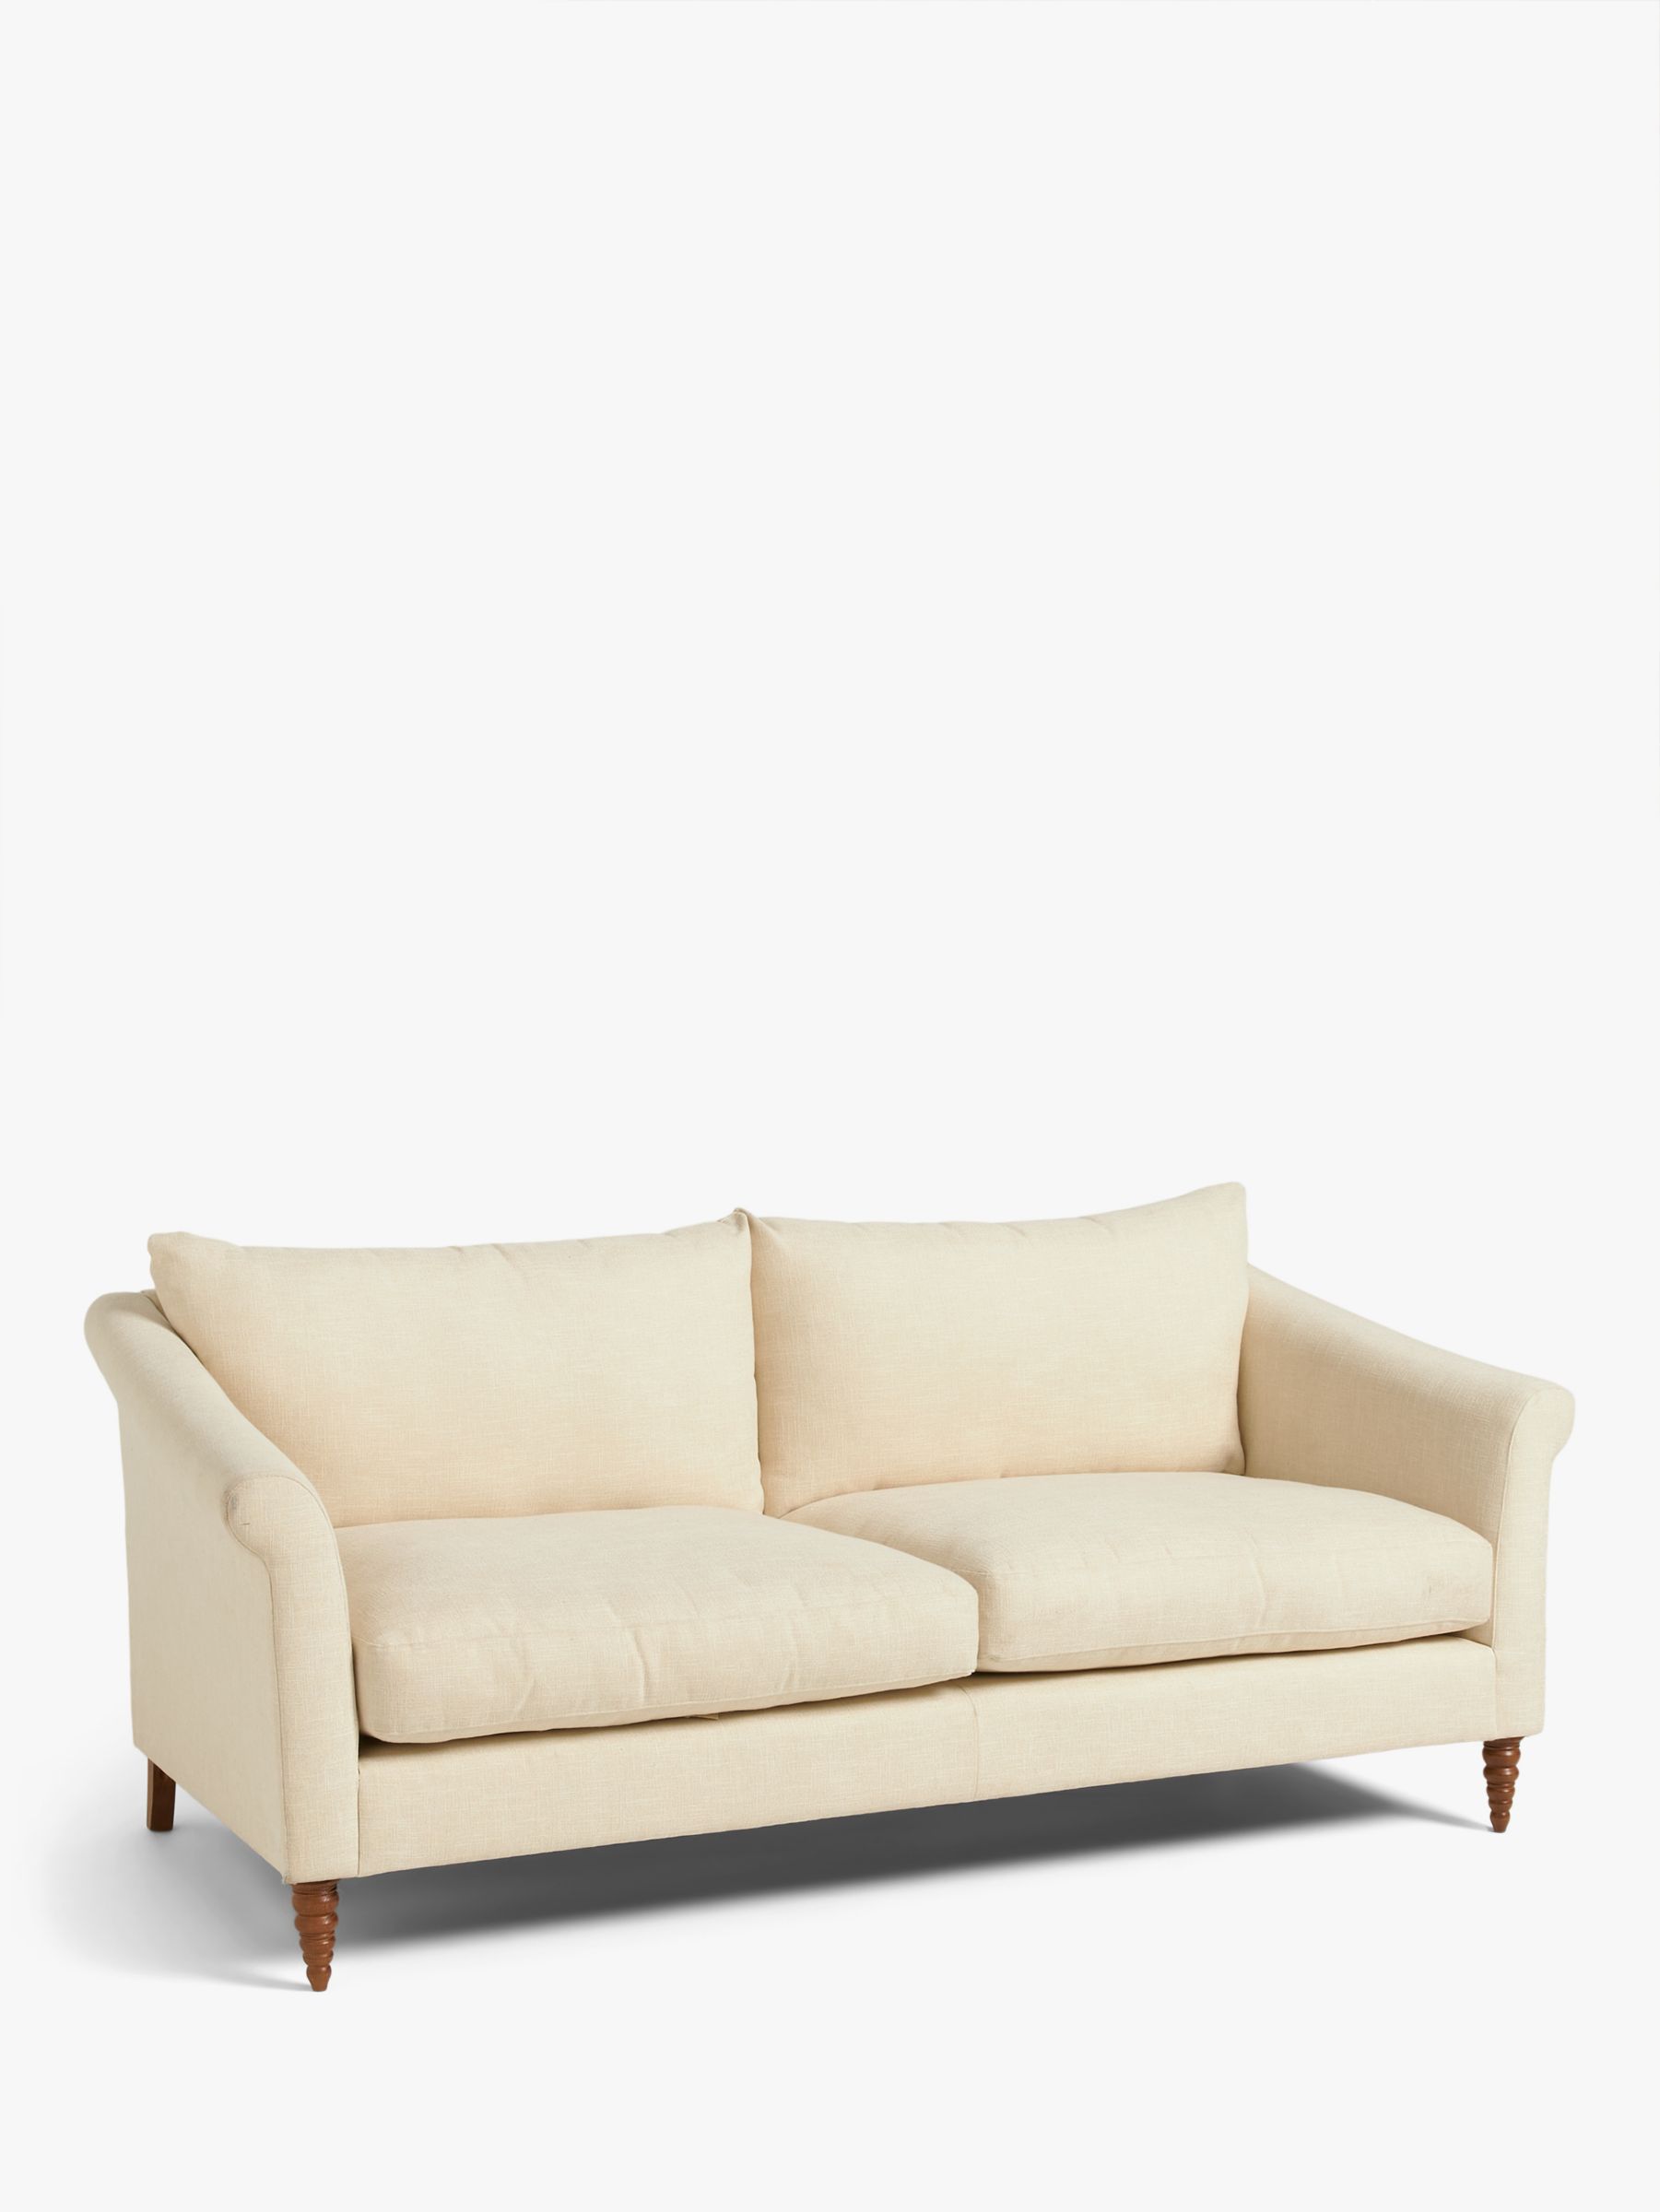 Sloane Range, John Lewis Sloane Grand 3 Seater Sofa, Dark Leg, Textured Linen Natural